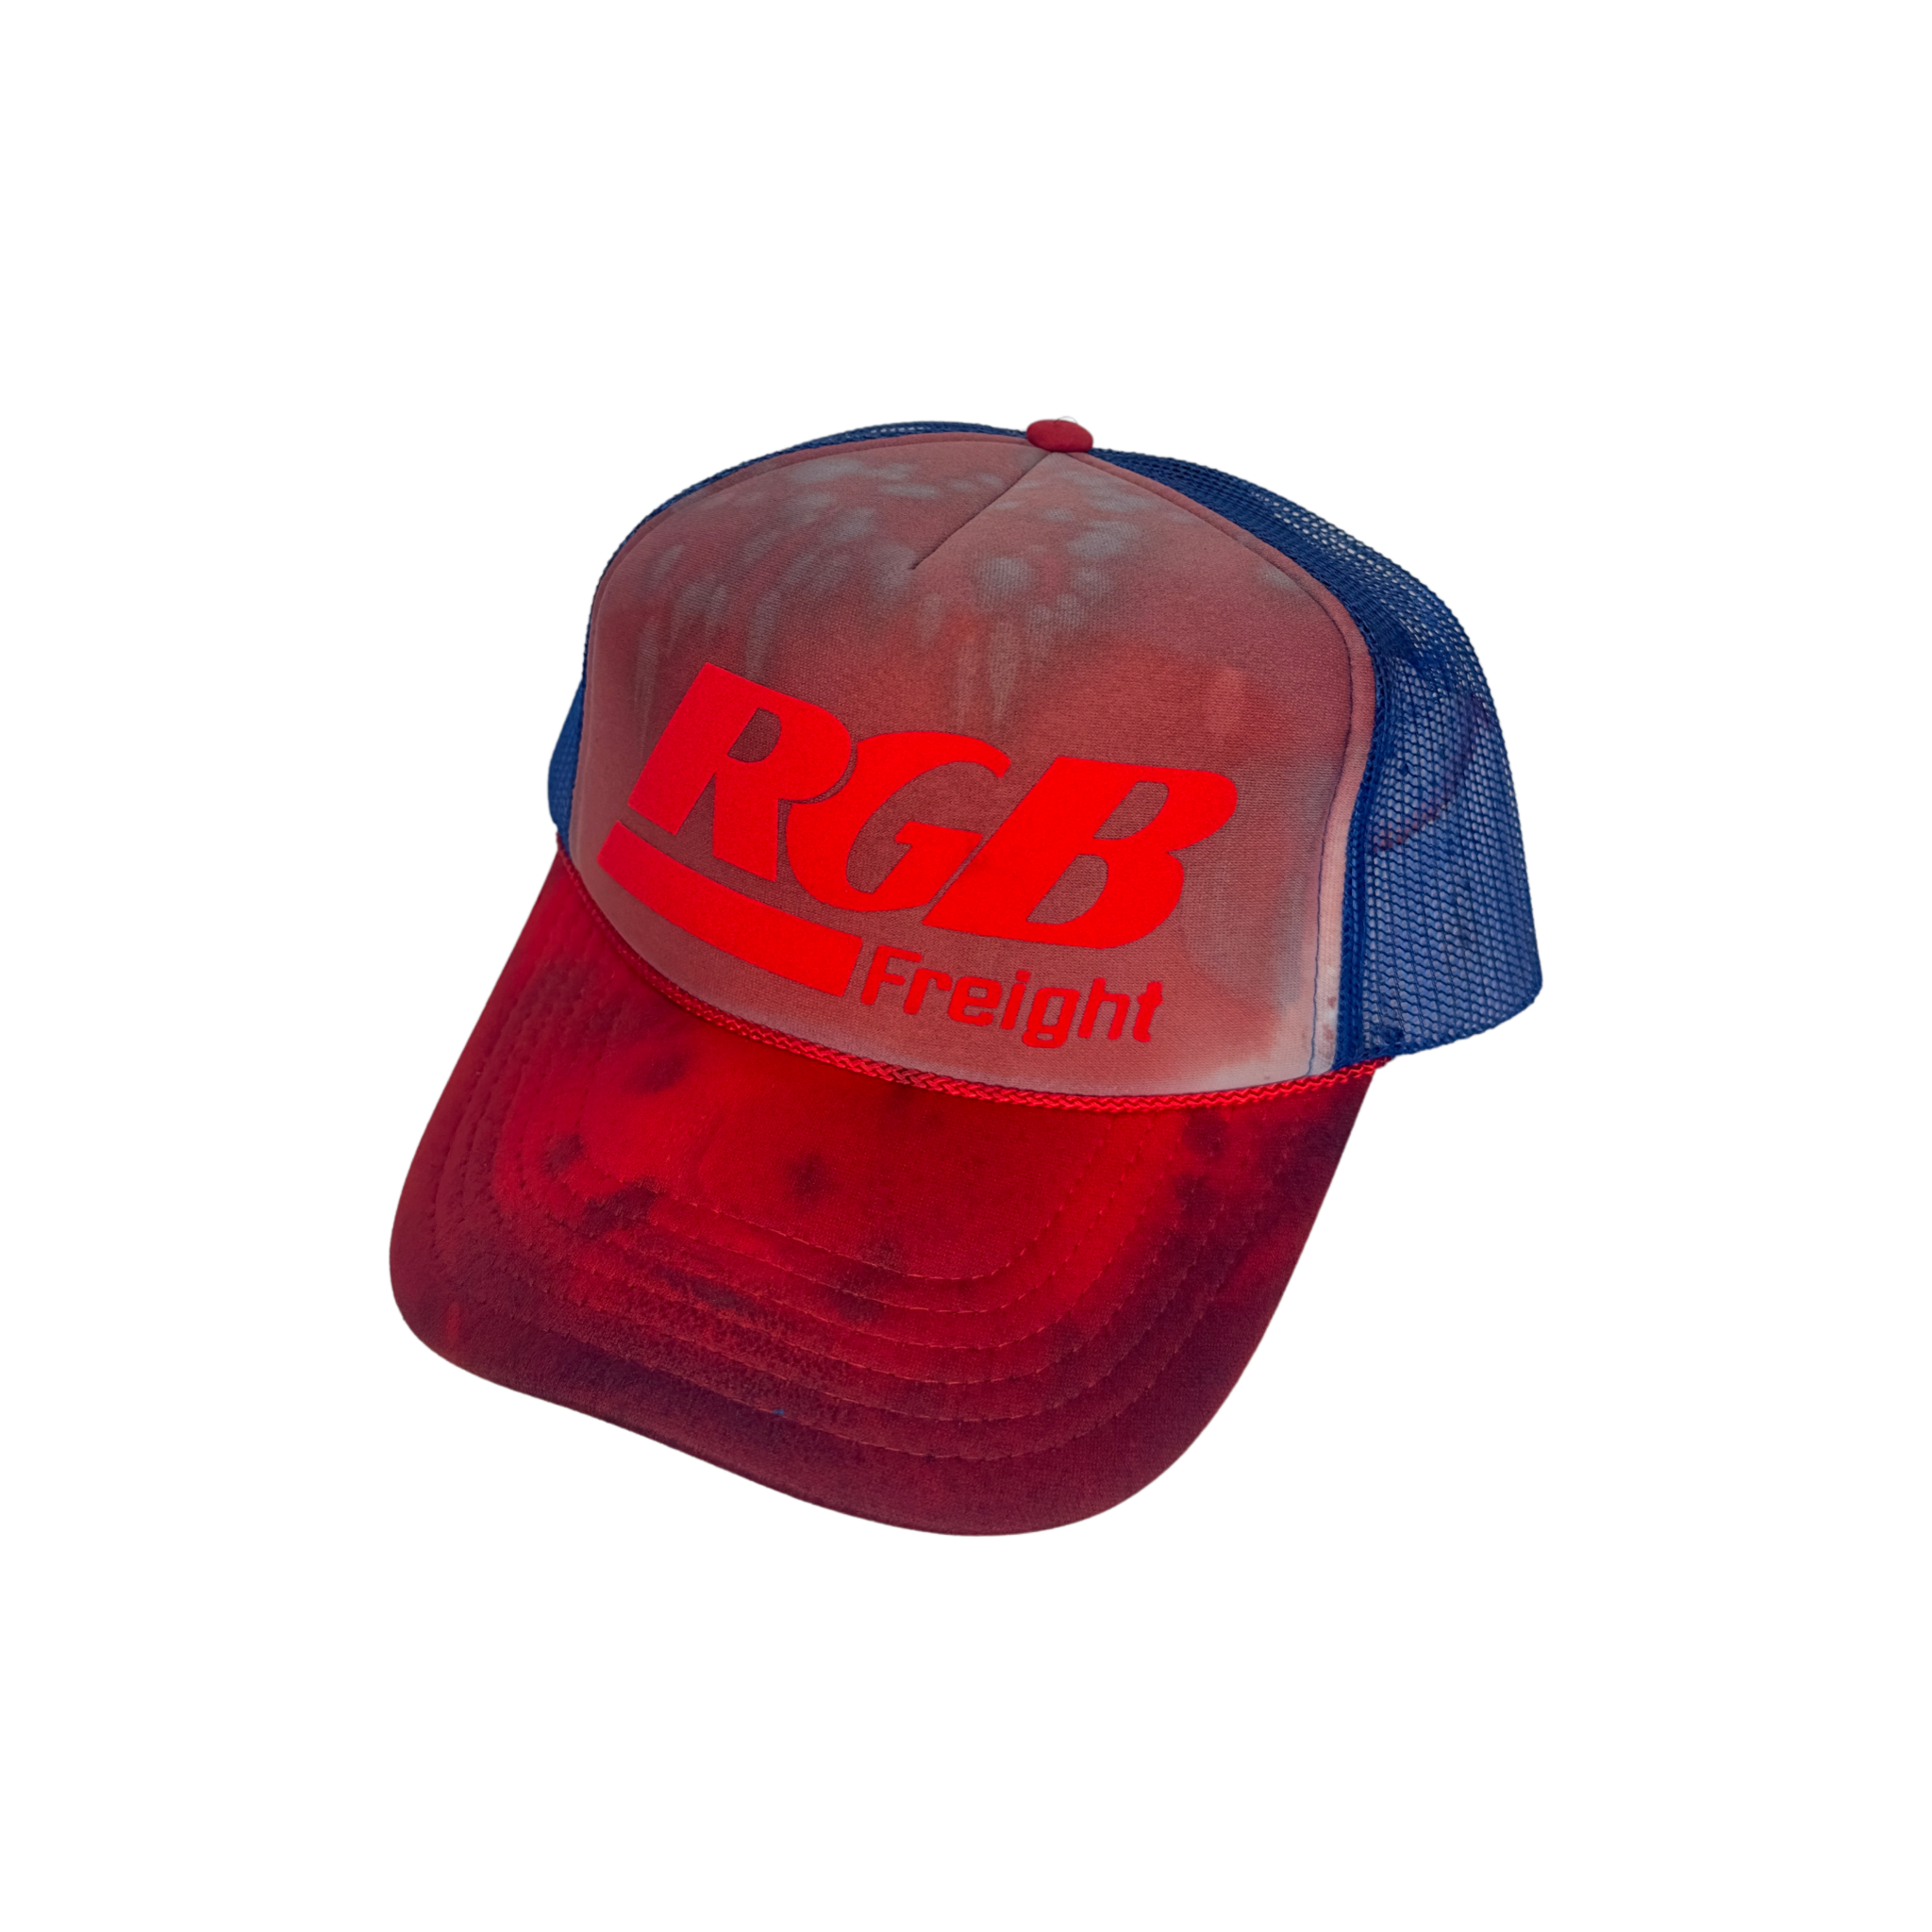 RGB FREIGHT TRUCKER HAT -  1 of 1 AMERICANA FADE